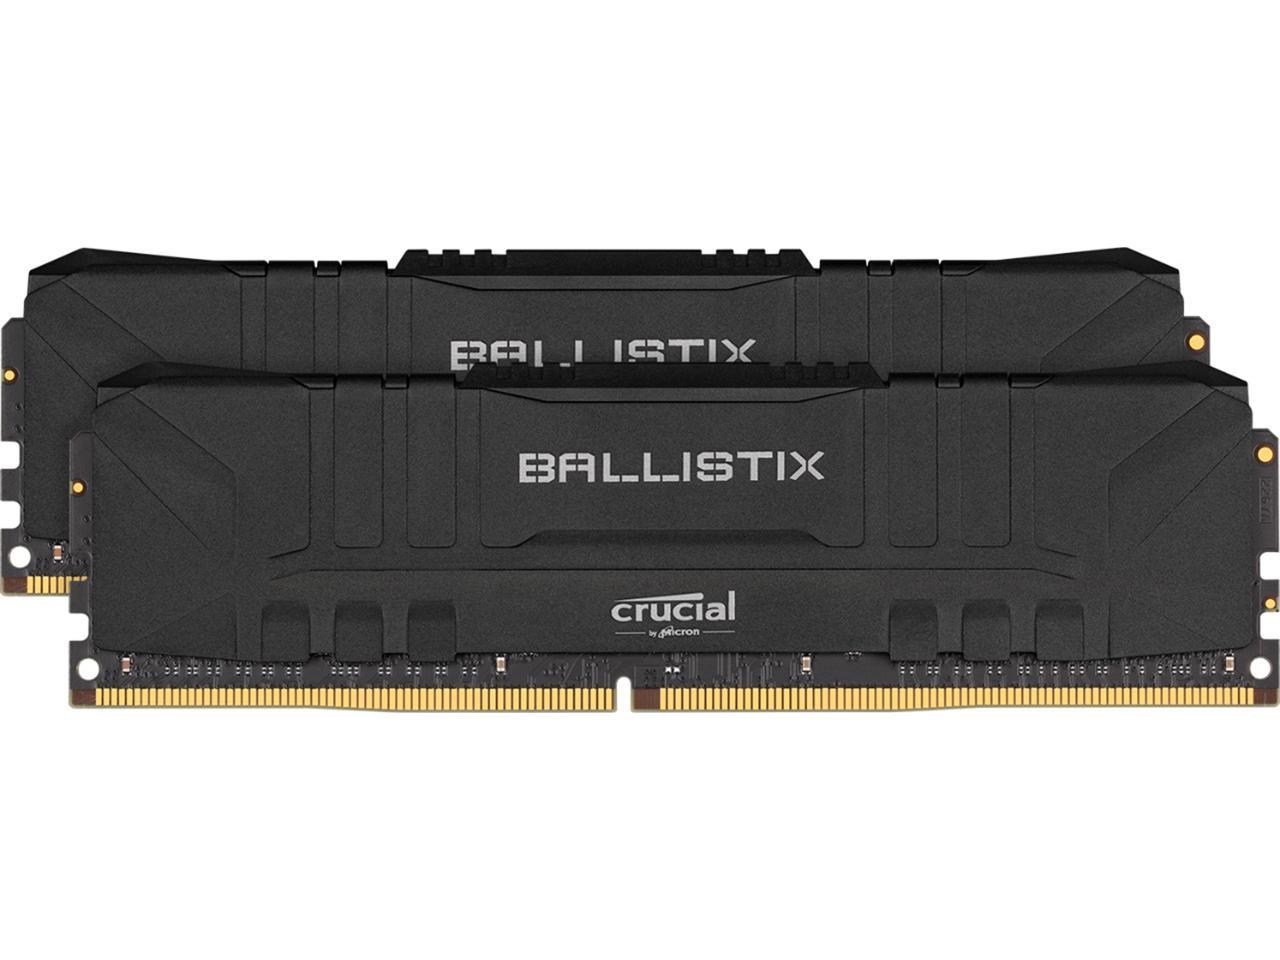 Crucial Ballistix 16GB (2 x 8GB) DDR4 3200 Desktop Memory - Newegg.com